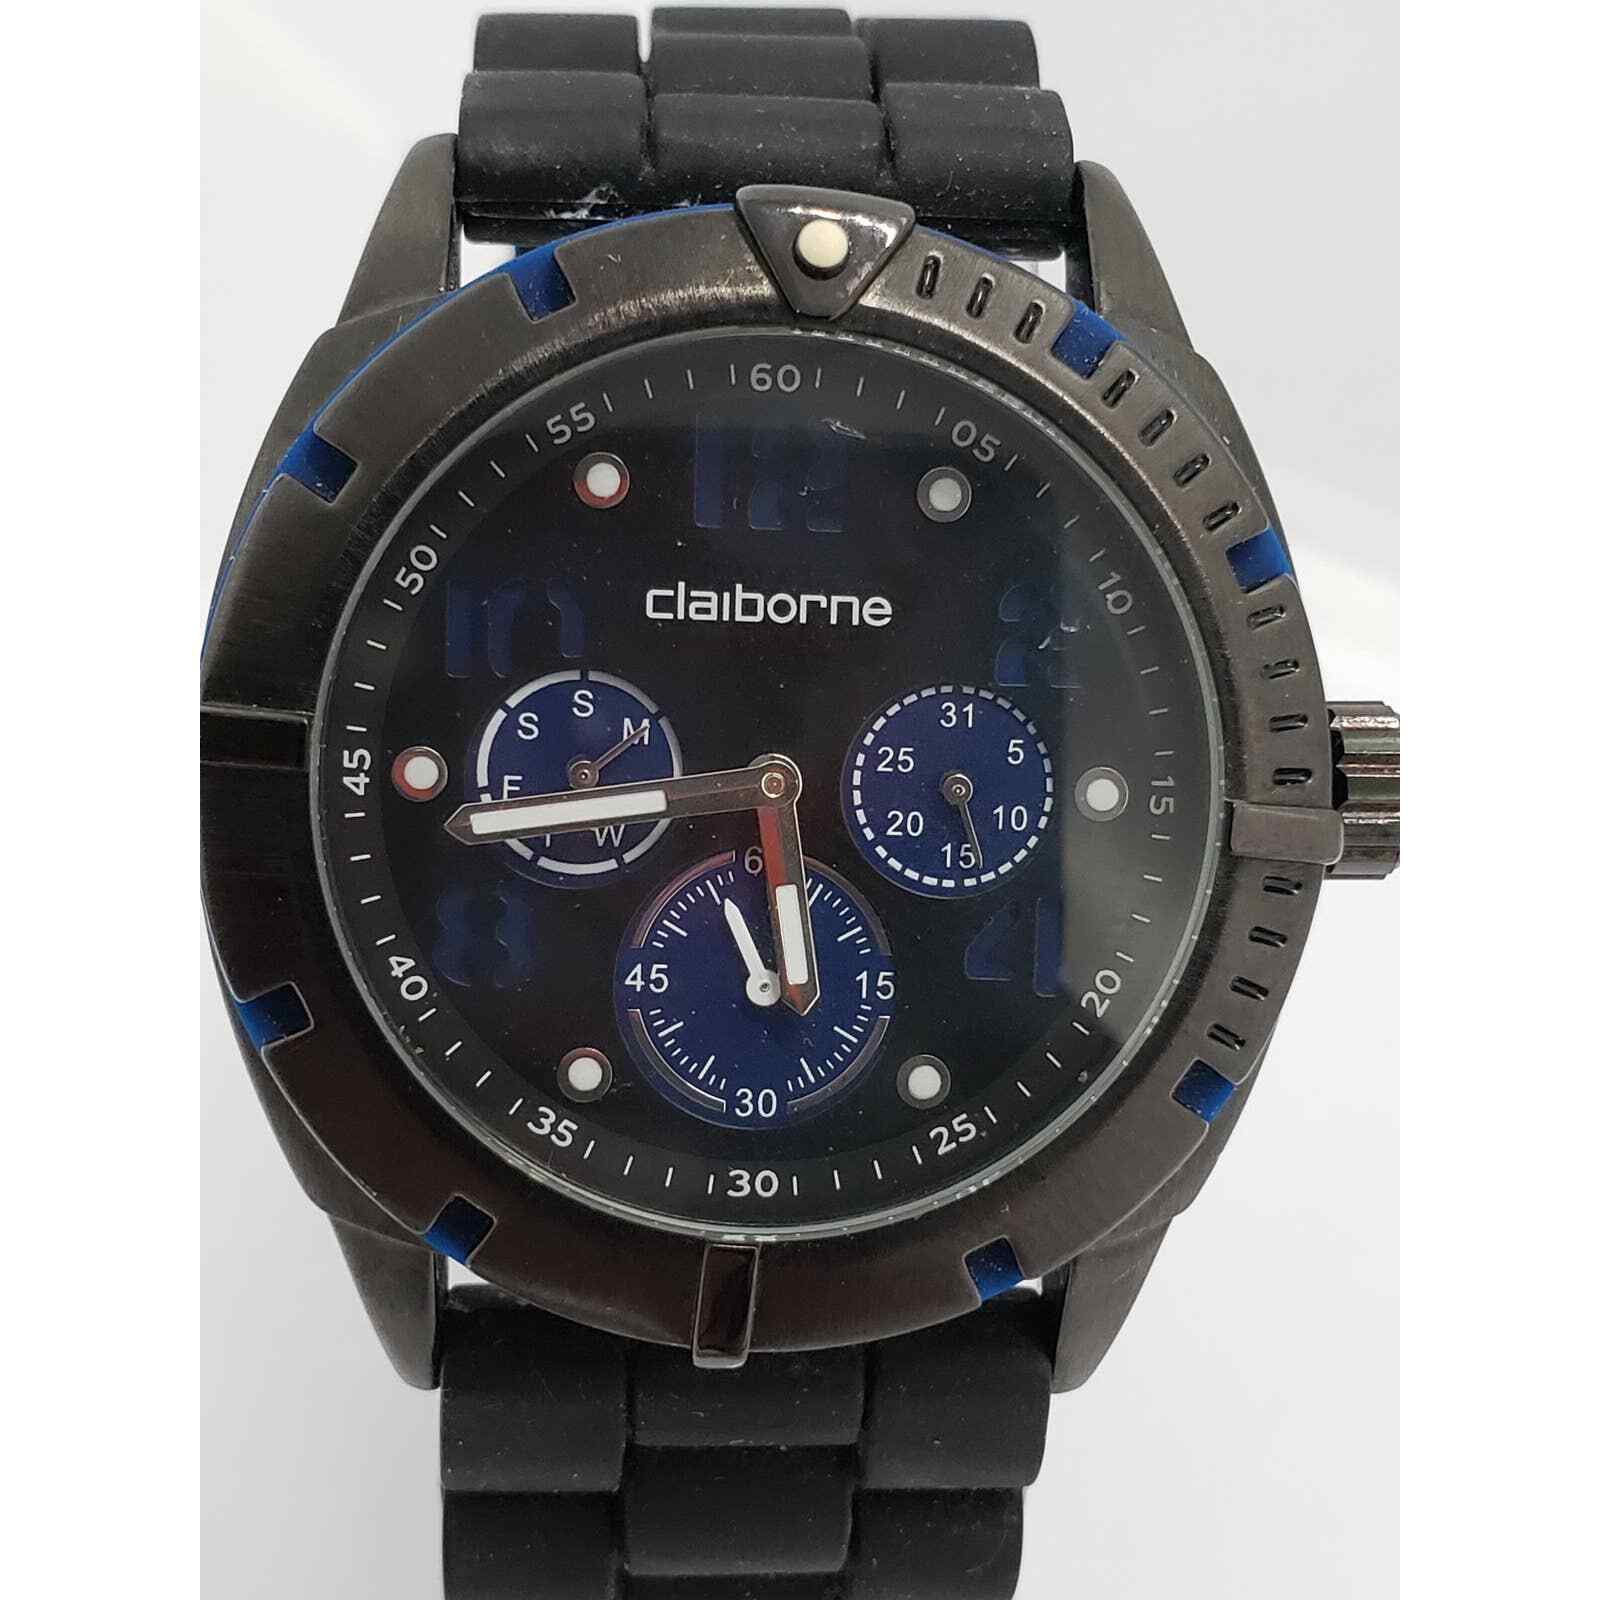 Claiborne men's sport watch. Multi function black face CLM 1013 Working watch